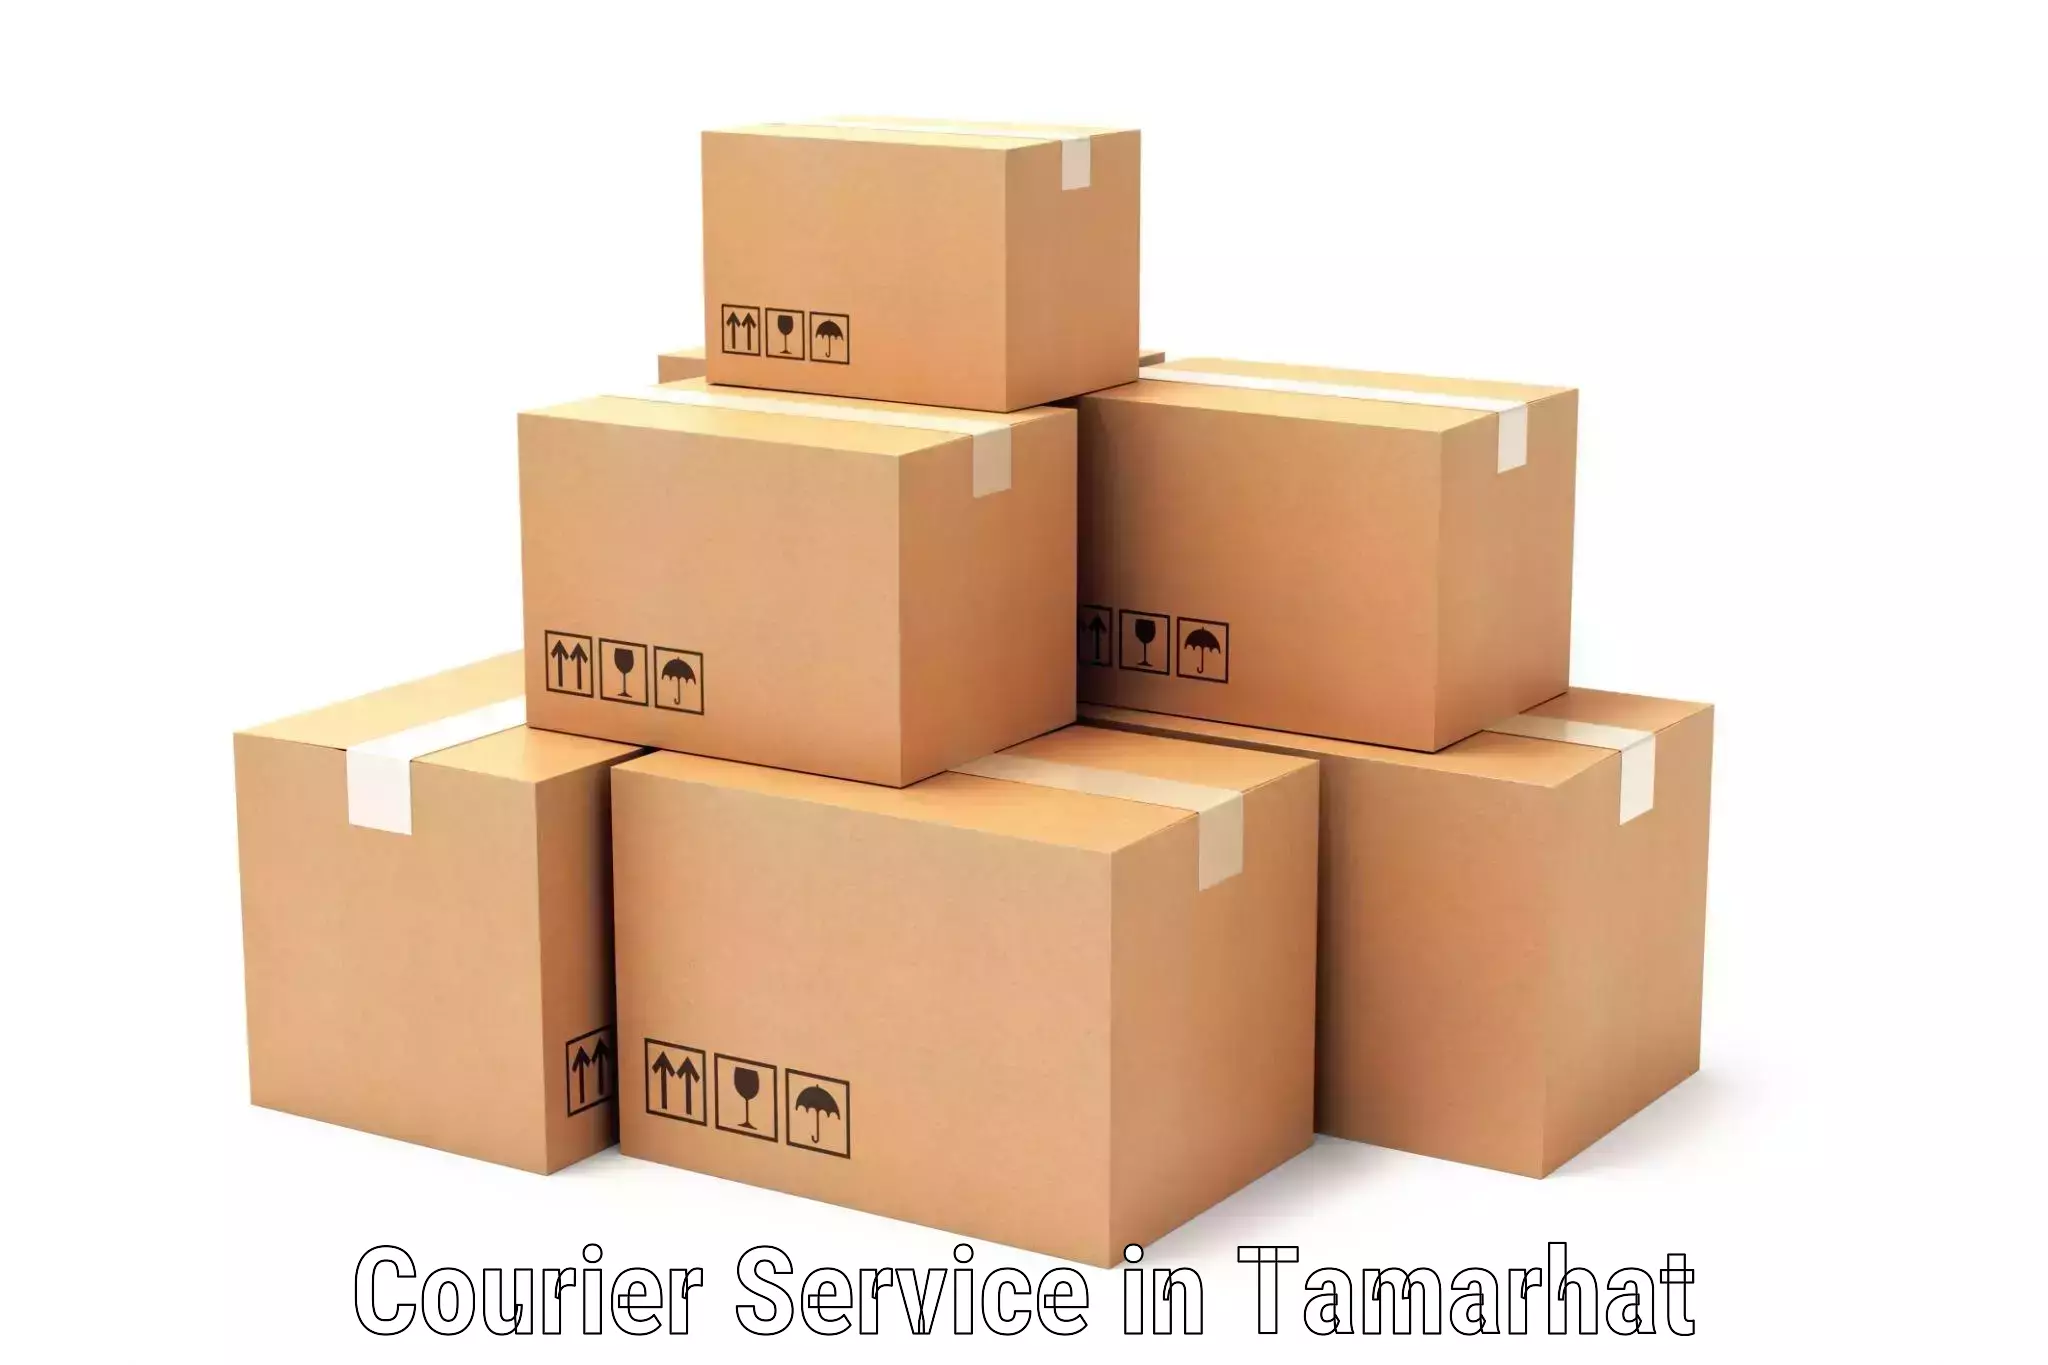 Courier service comparison in Tamarhat